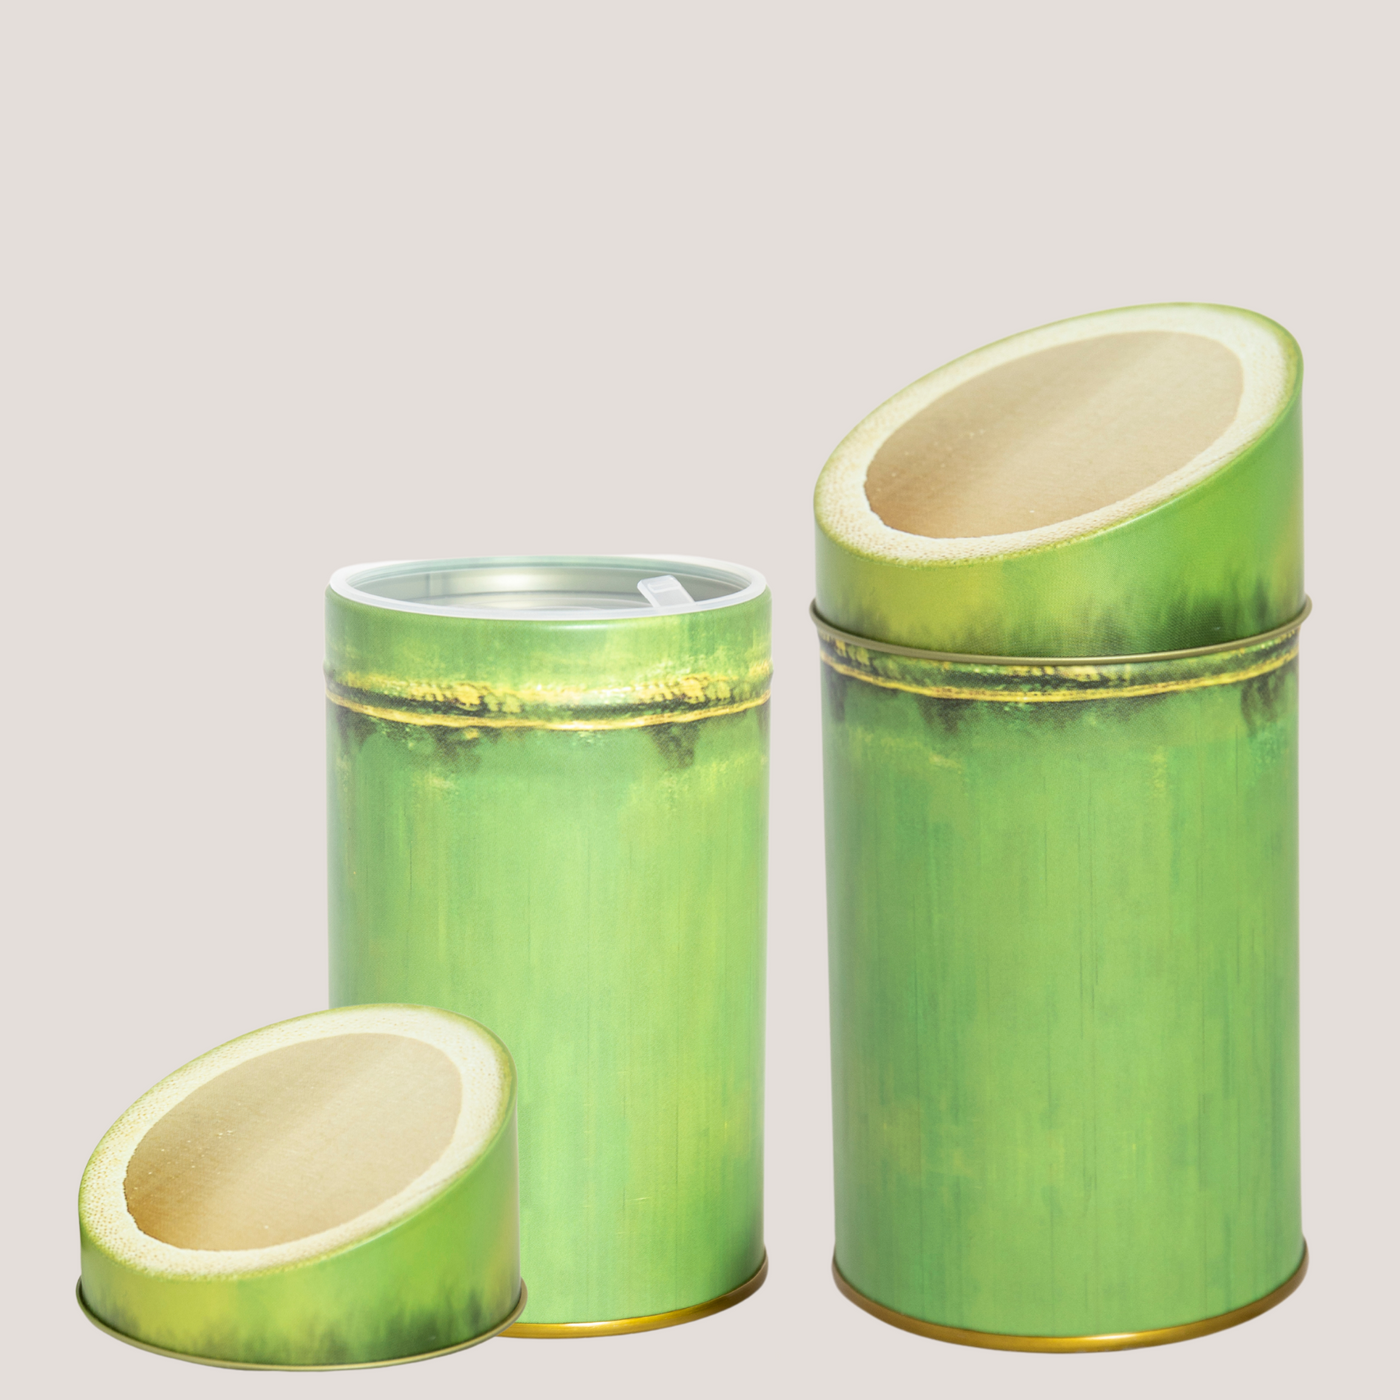 Bamboo storage jar 100 g